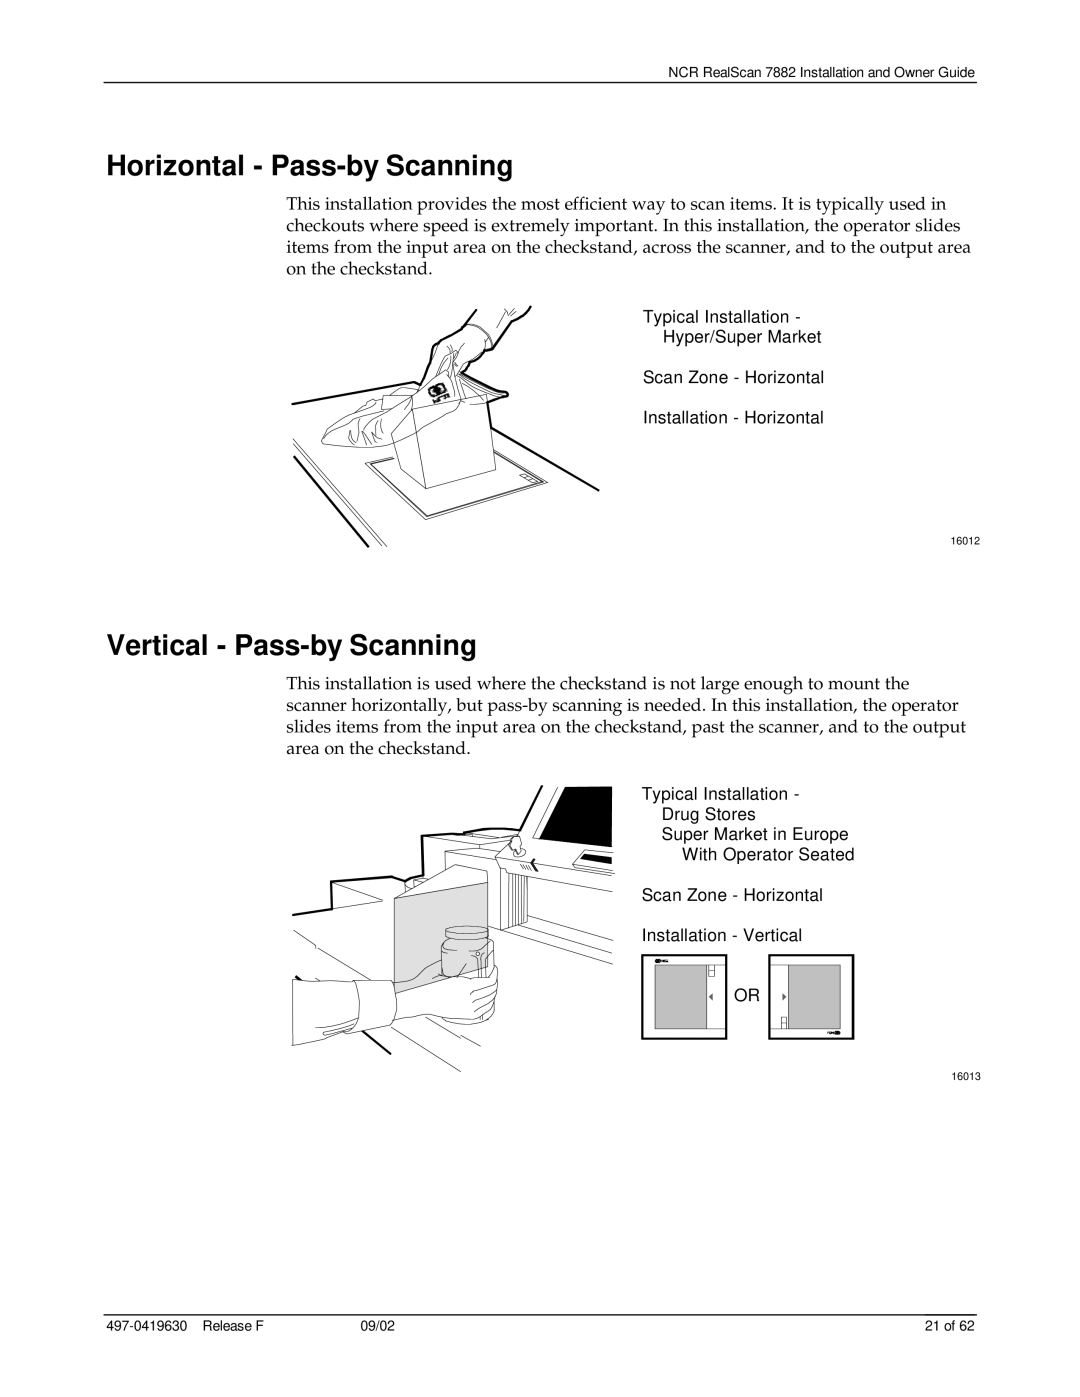 NCR 7882 manual Horizontal - Pass-by Scanning, Vertical - Pass-by Scanning, Installation - Horizontal 